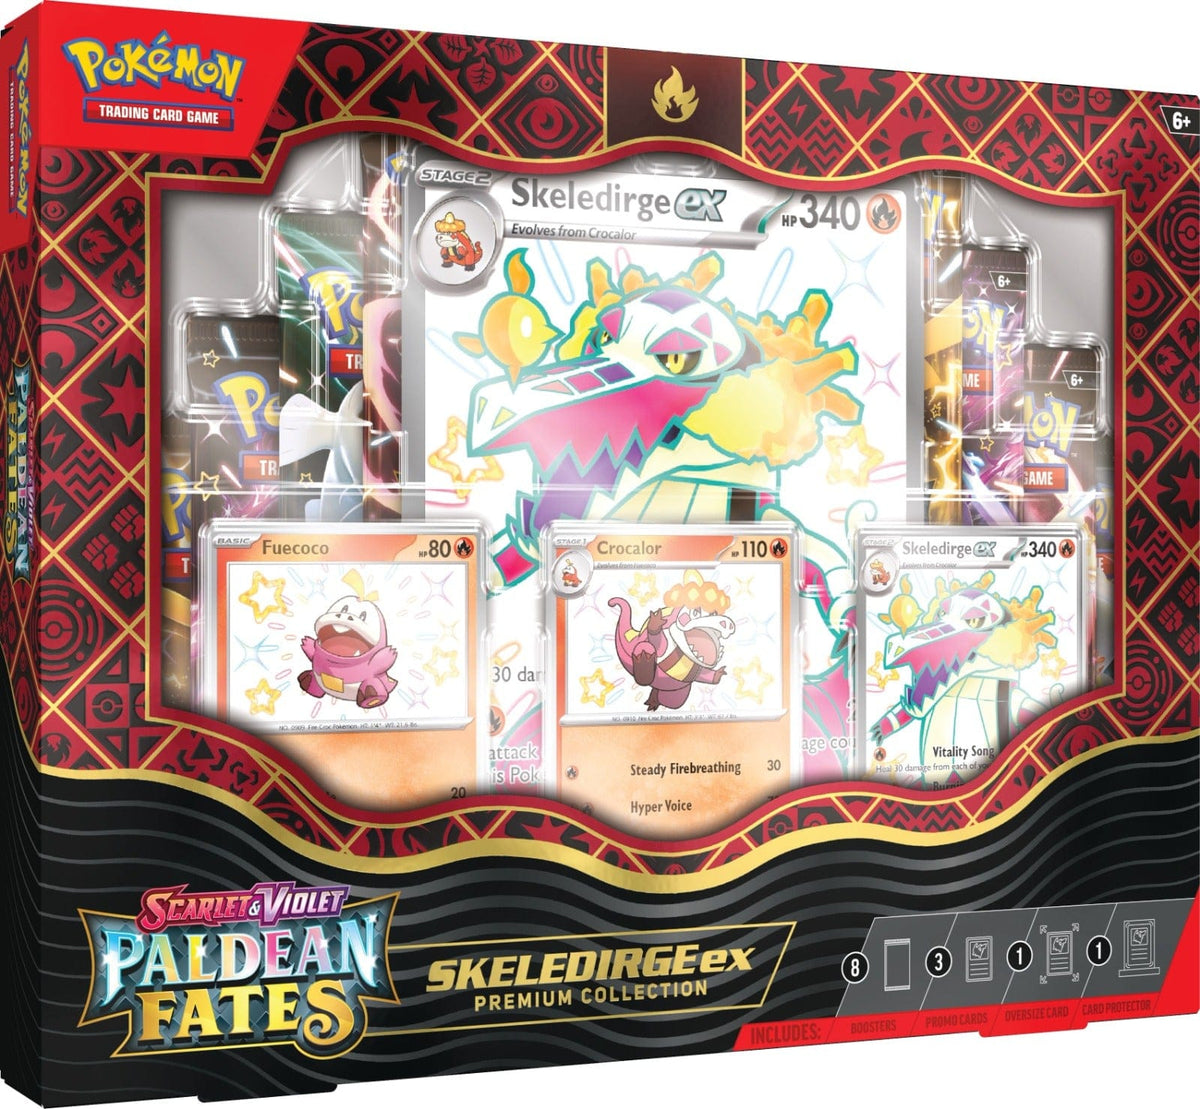 Pokémon TCG Paldean Fates - Skeledirge ex Premium Collection